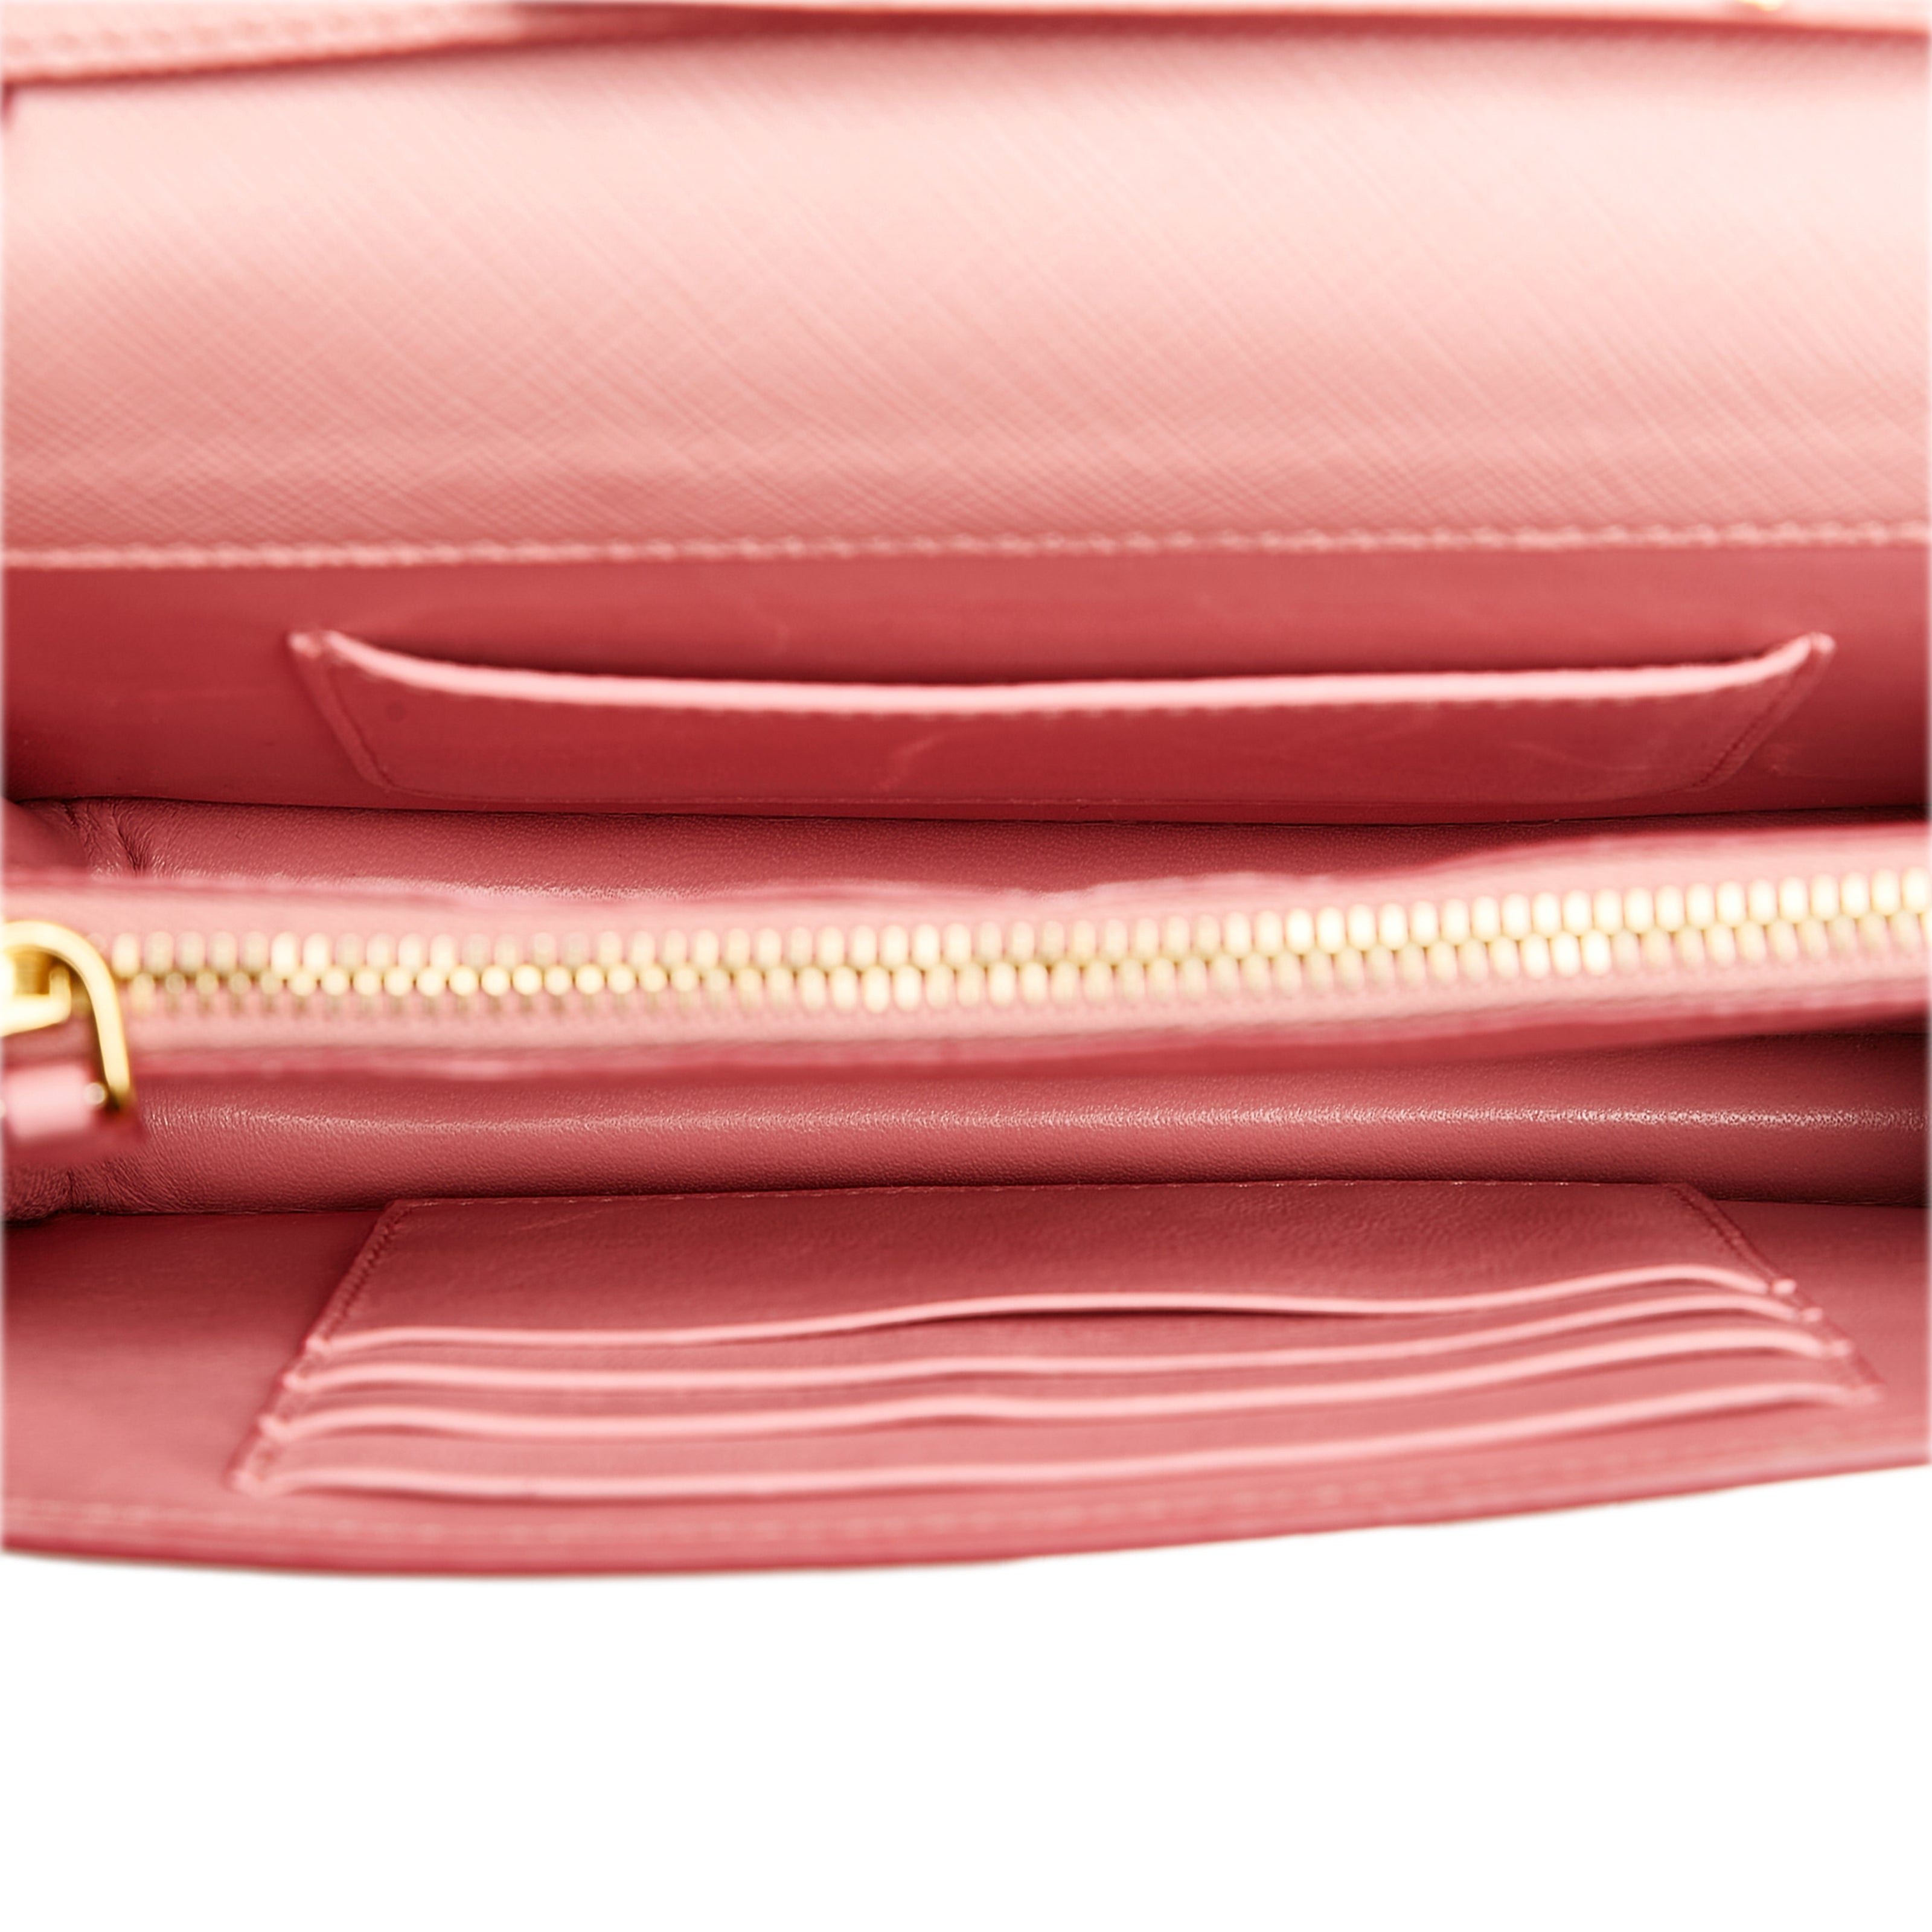 Prada Saffiano Wallet on Chain in Pink – Vault 55